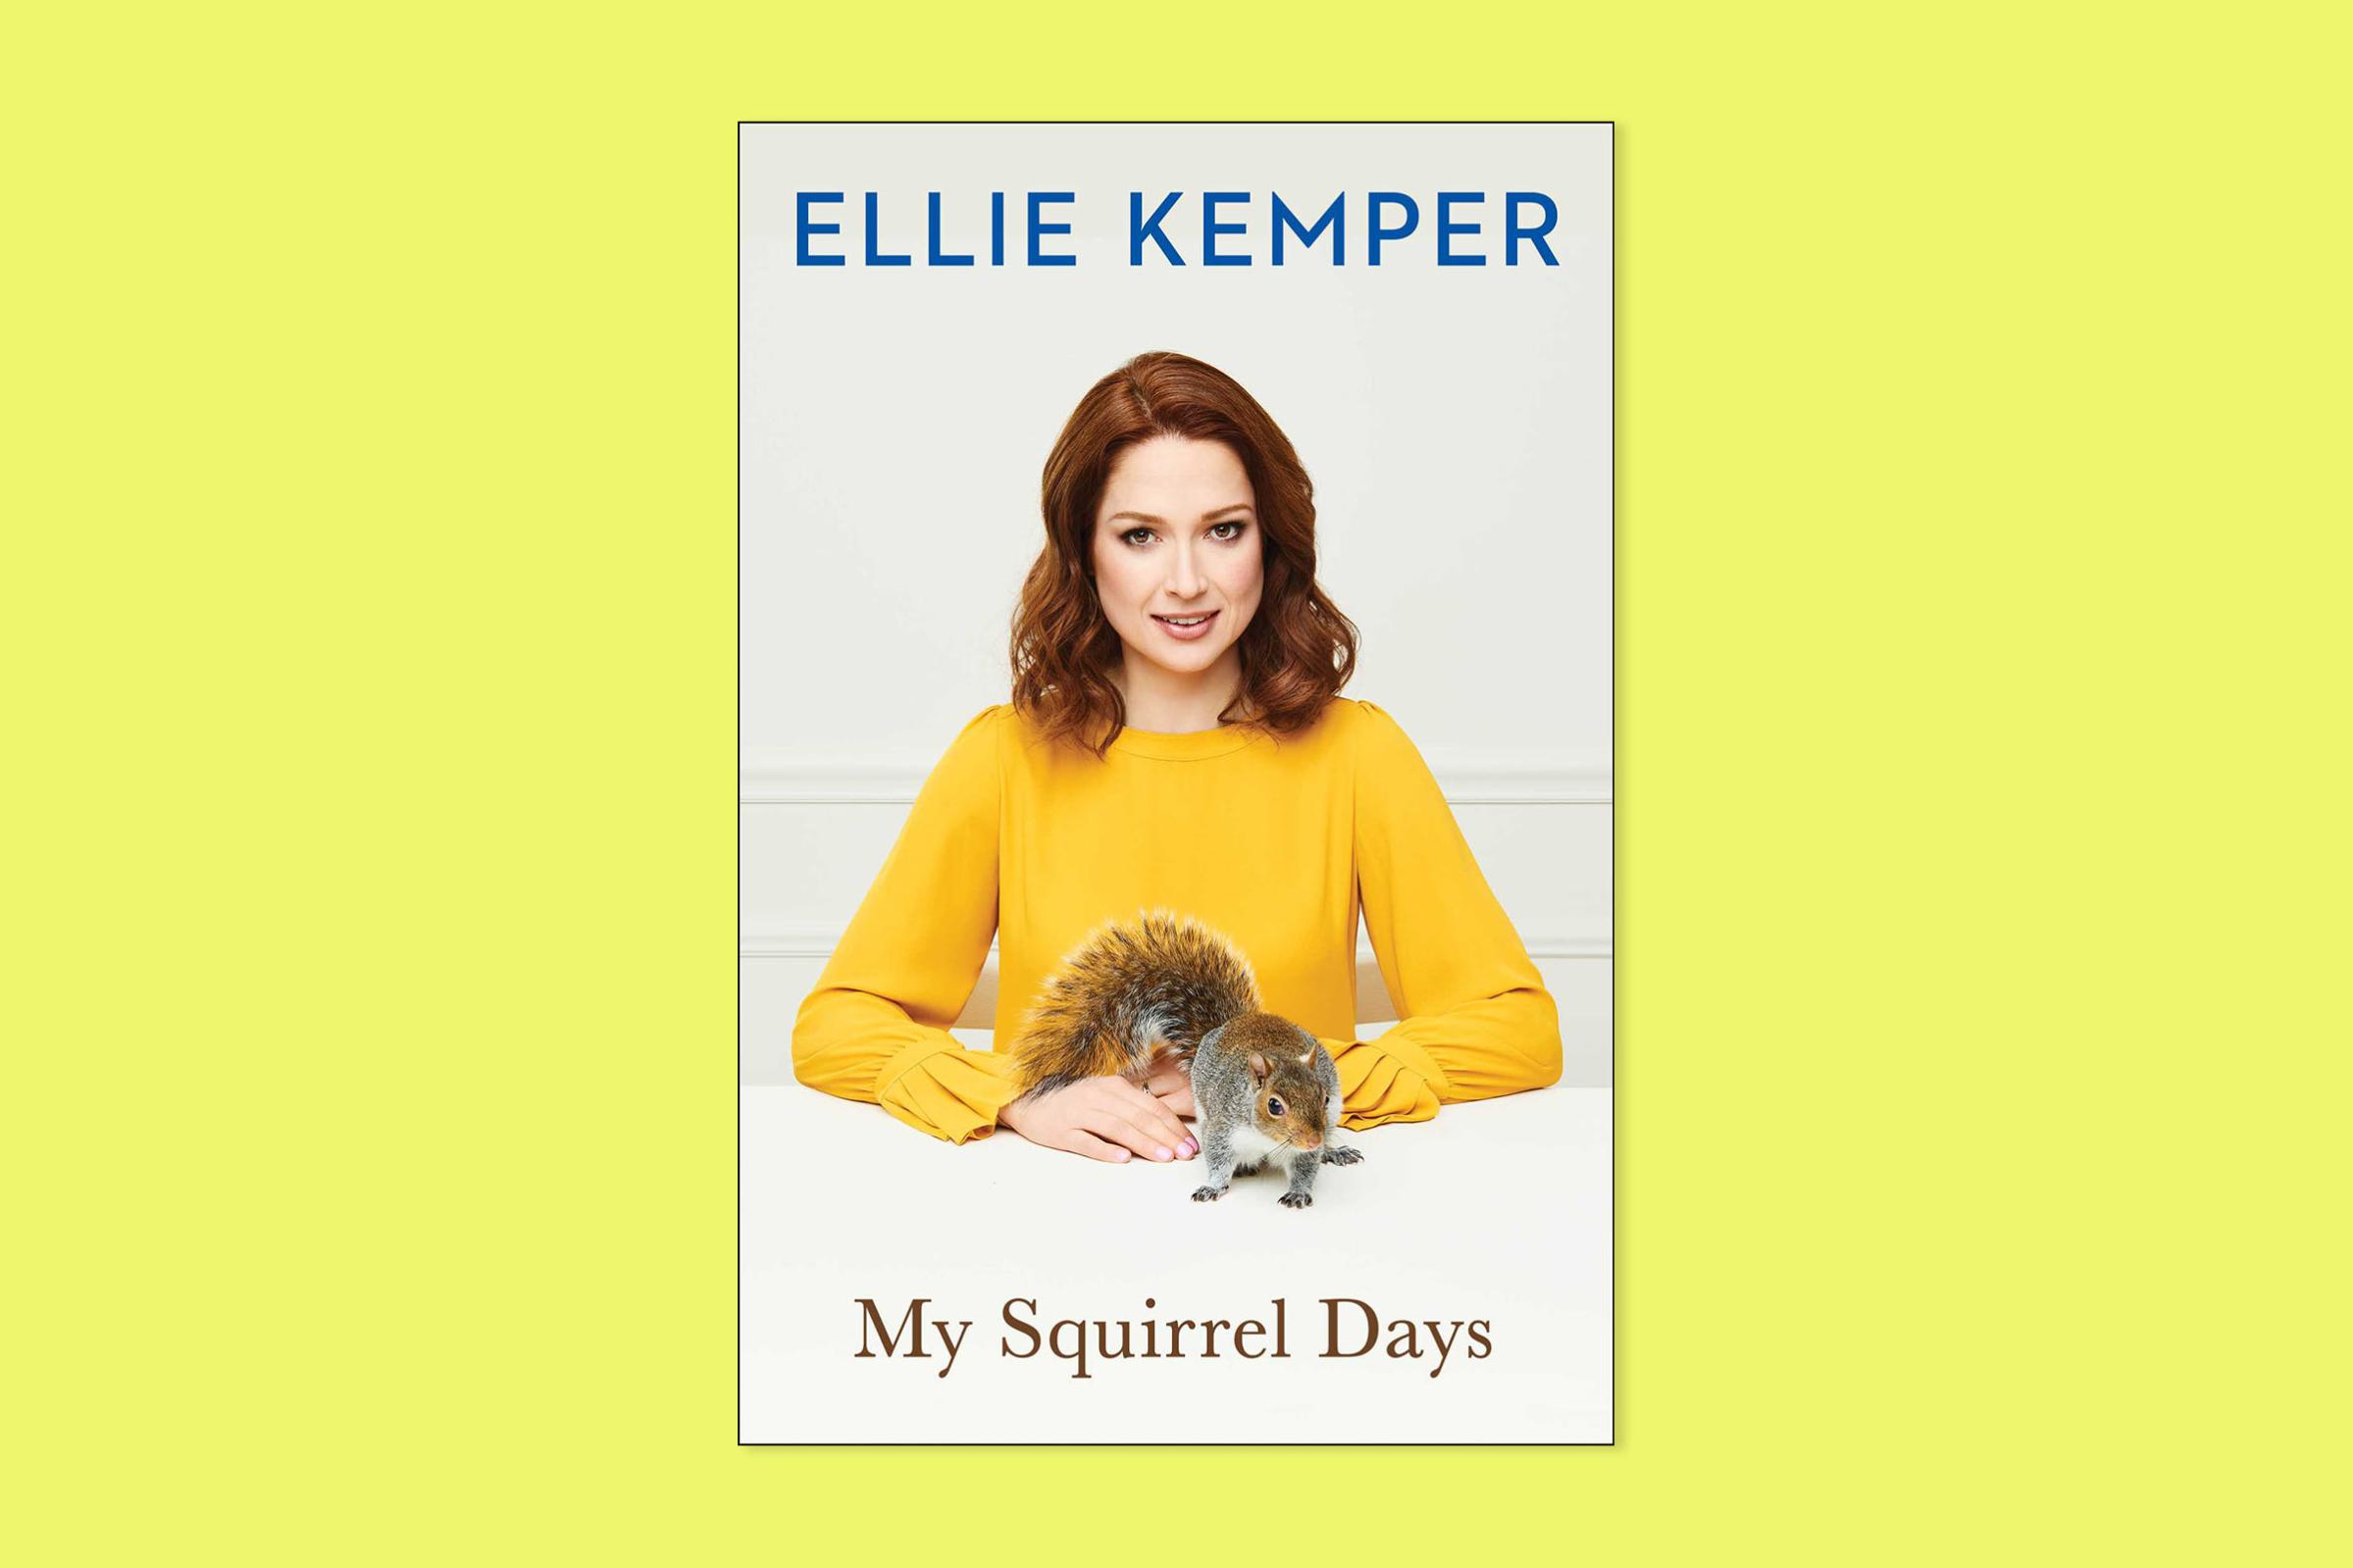 My Squirrel Days by Ellie Kemper